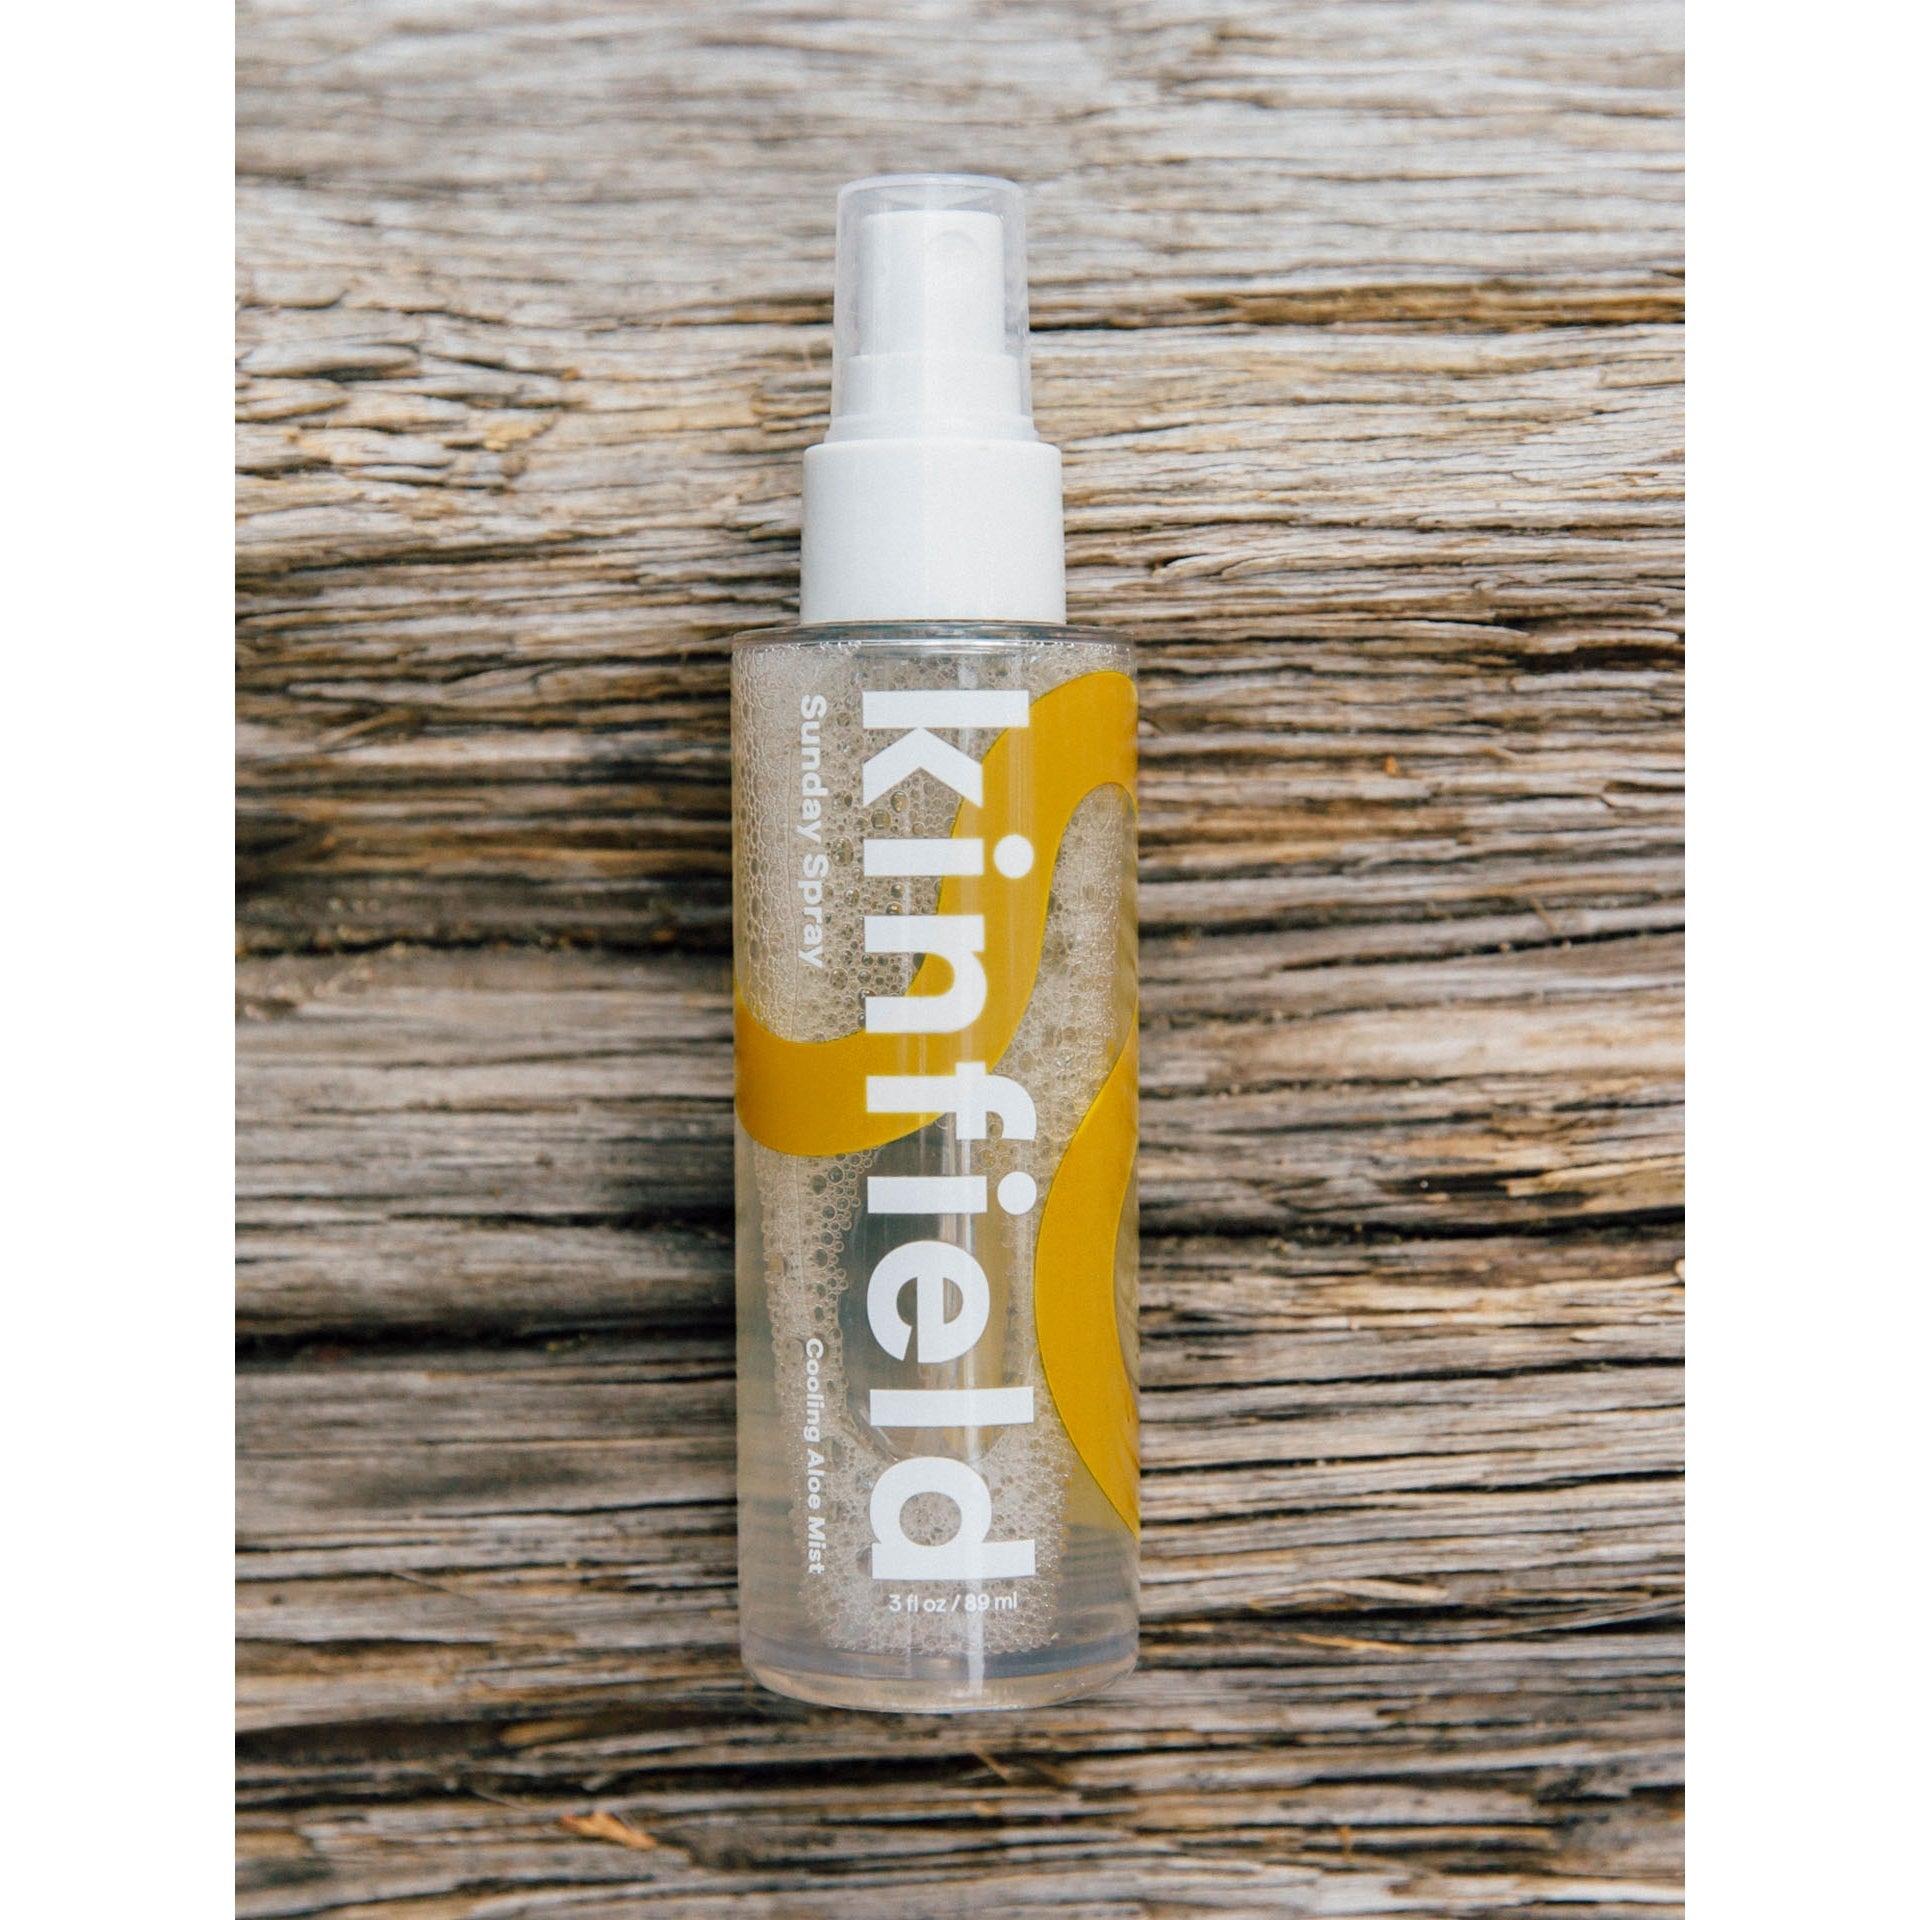 Kinfield | Sunday Spray Aloe Facial Mist, Personal Care, Kinfield, Defiance Outdoor Gear Co.